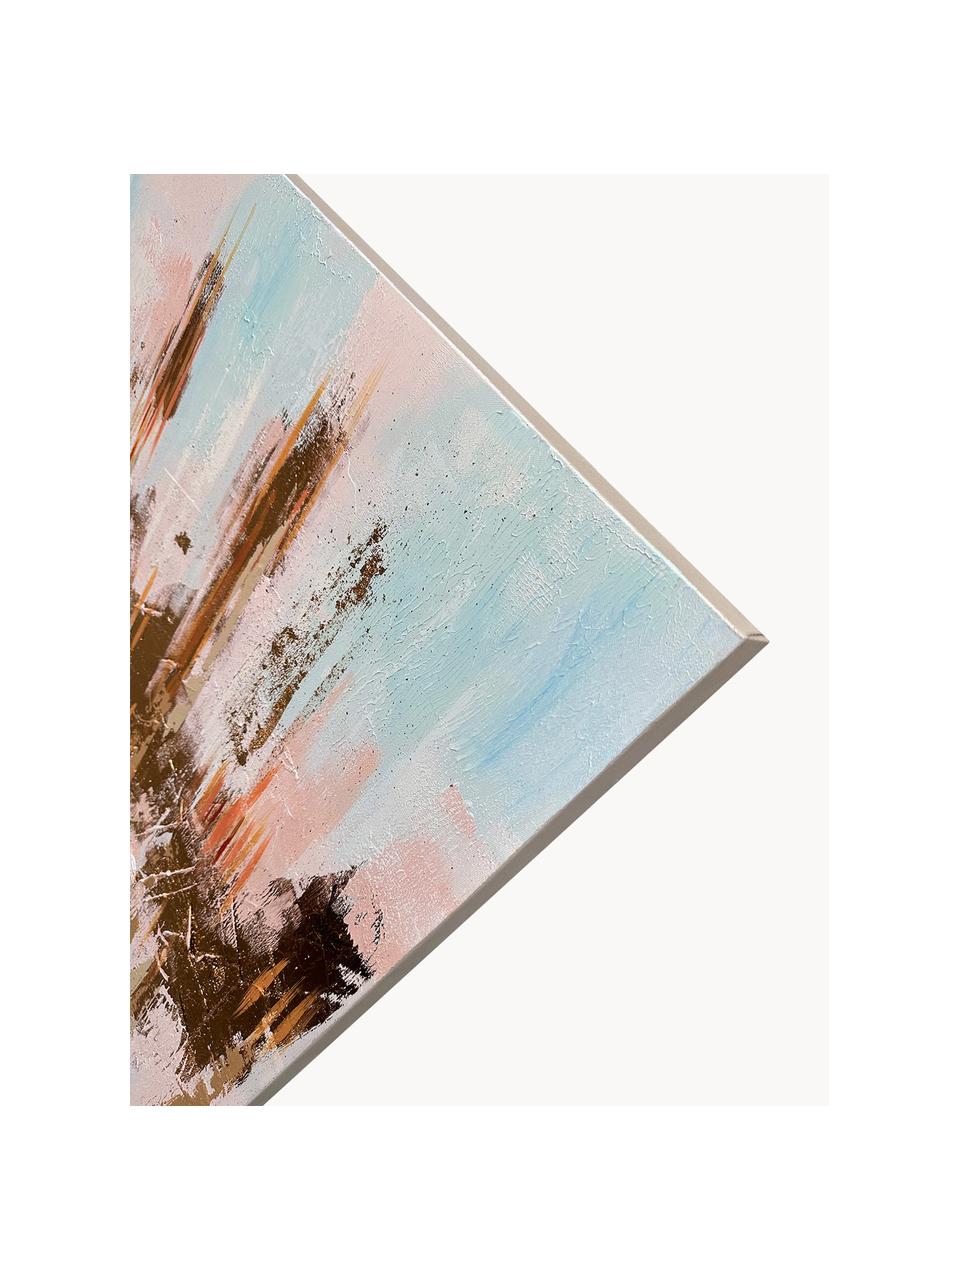 Lienzo pintado a mano Interferenza di Colori, Azul claro, rosa pálido, beige, An 140 x Al 70 cm